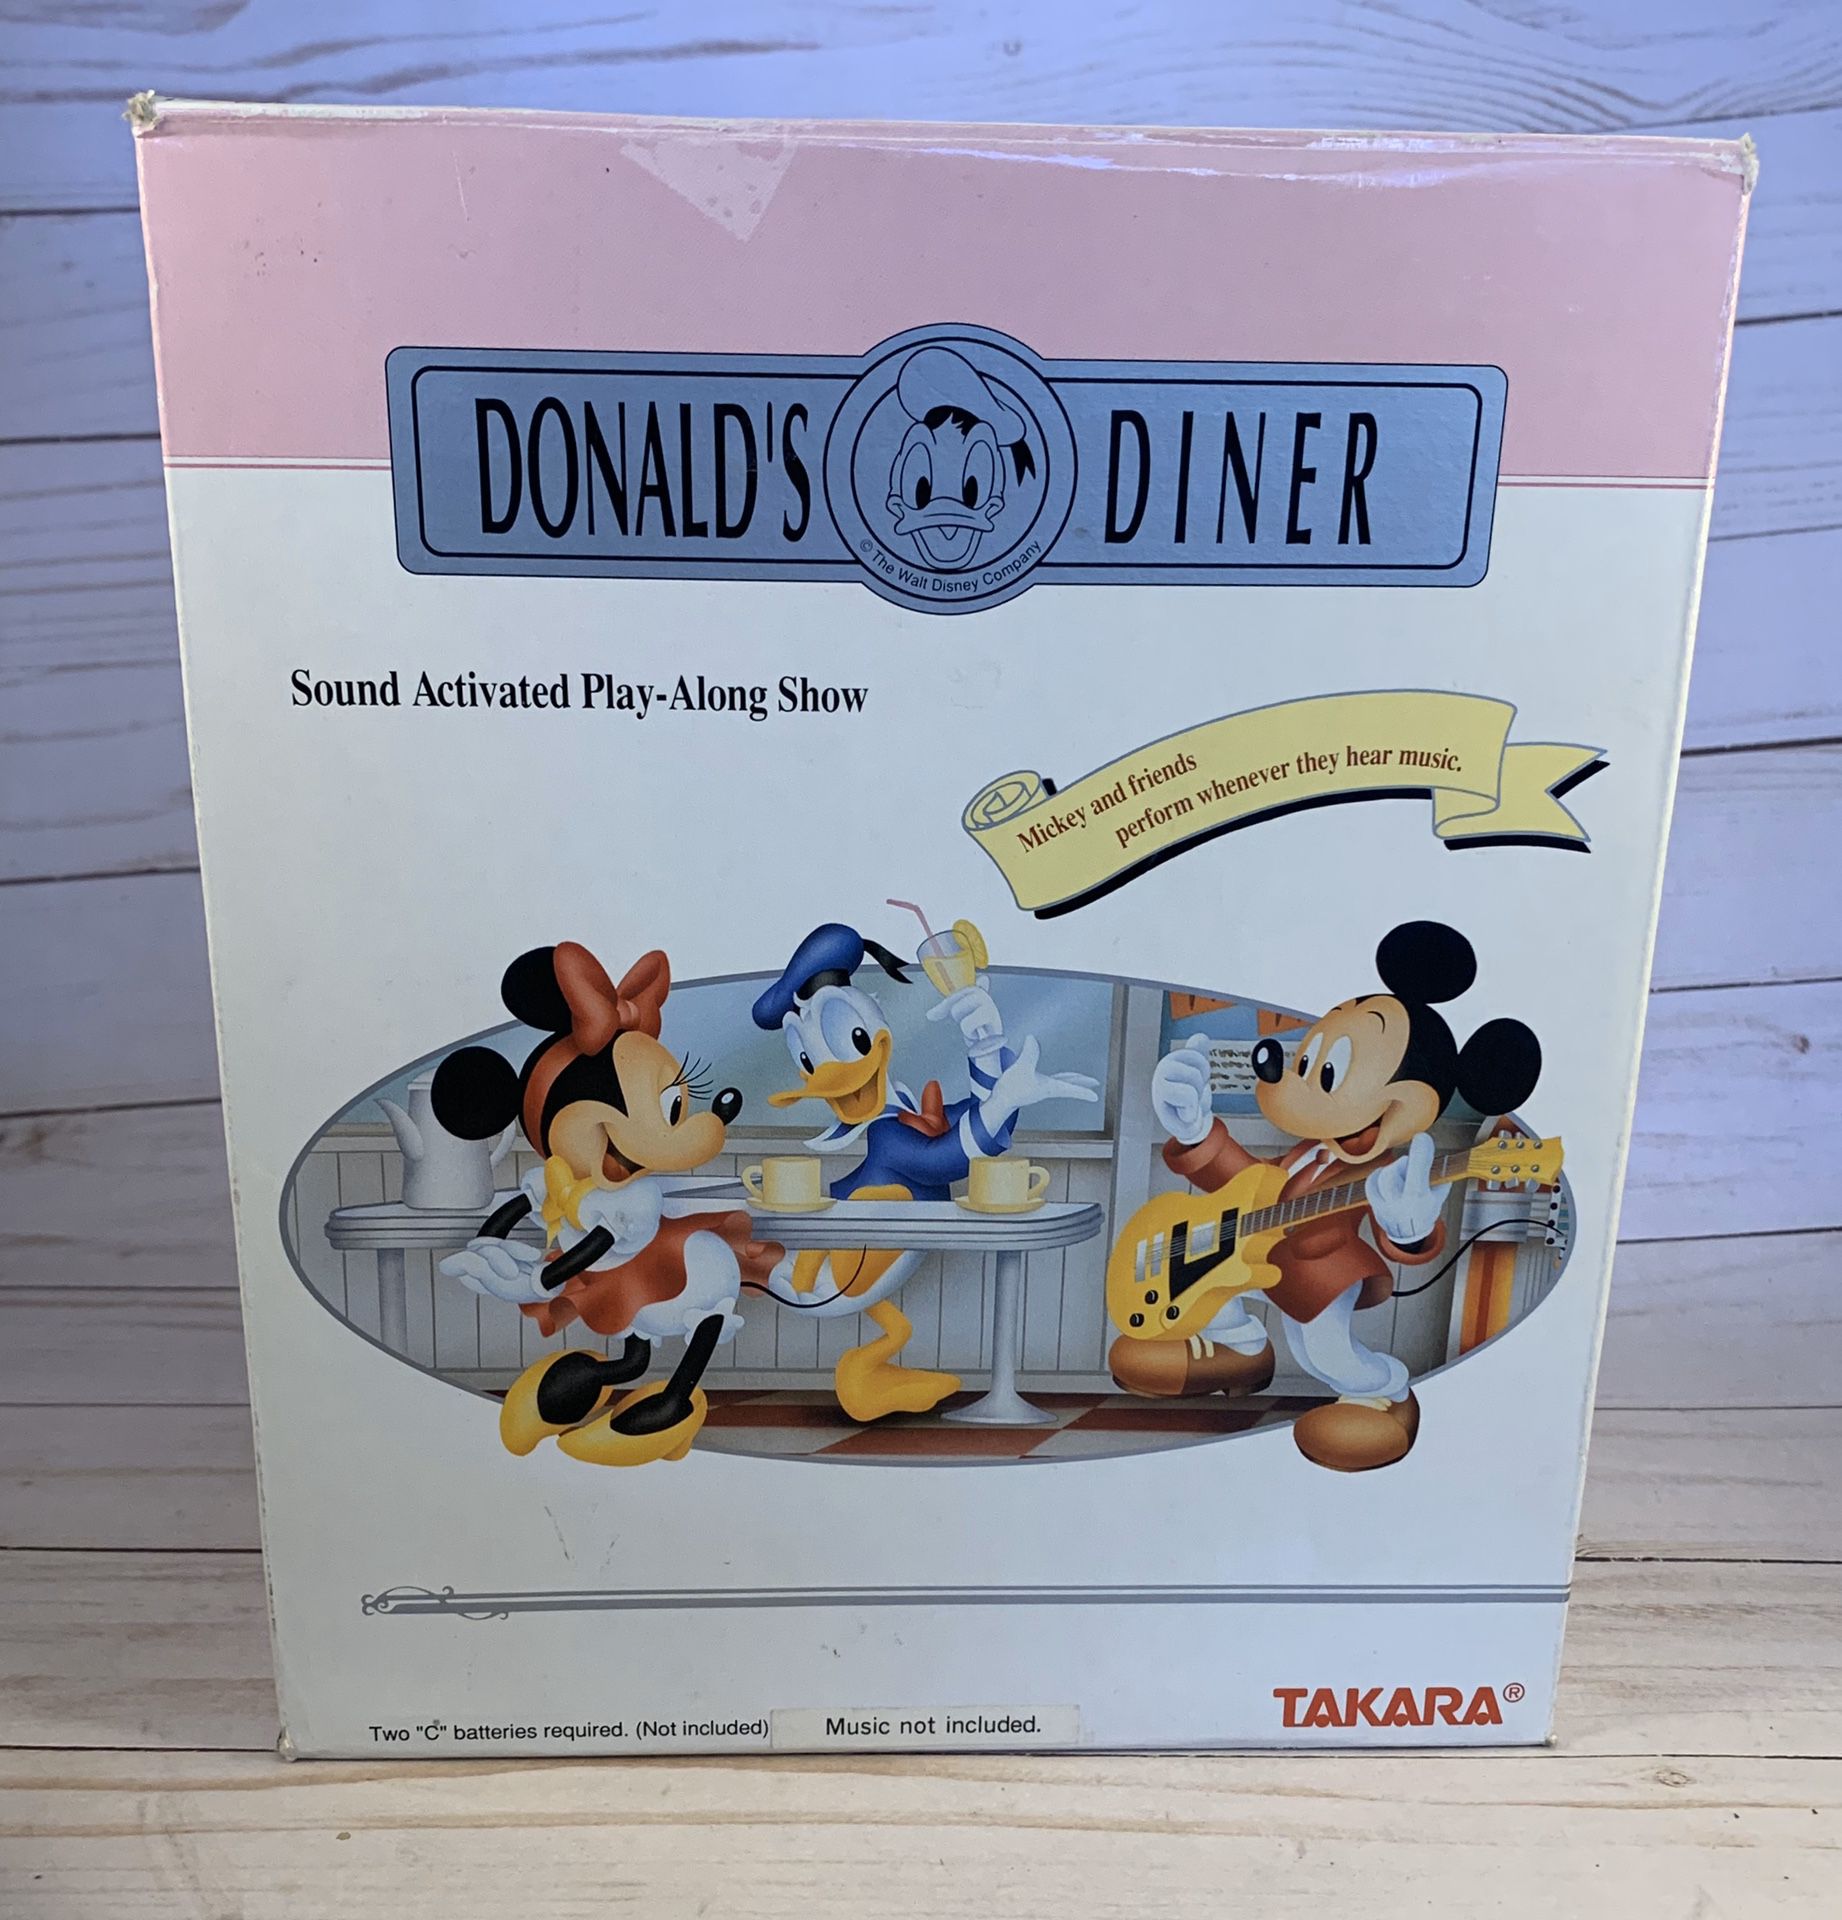 Disney’s Donald Diner